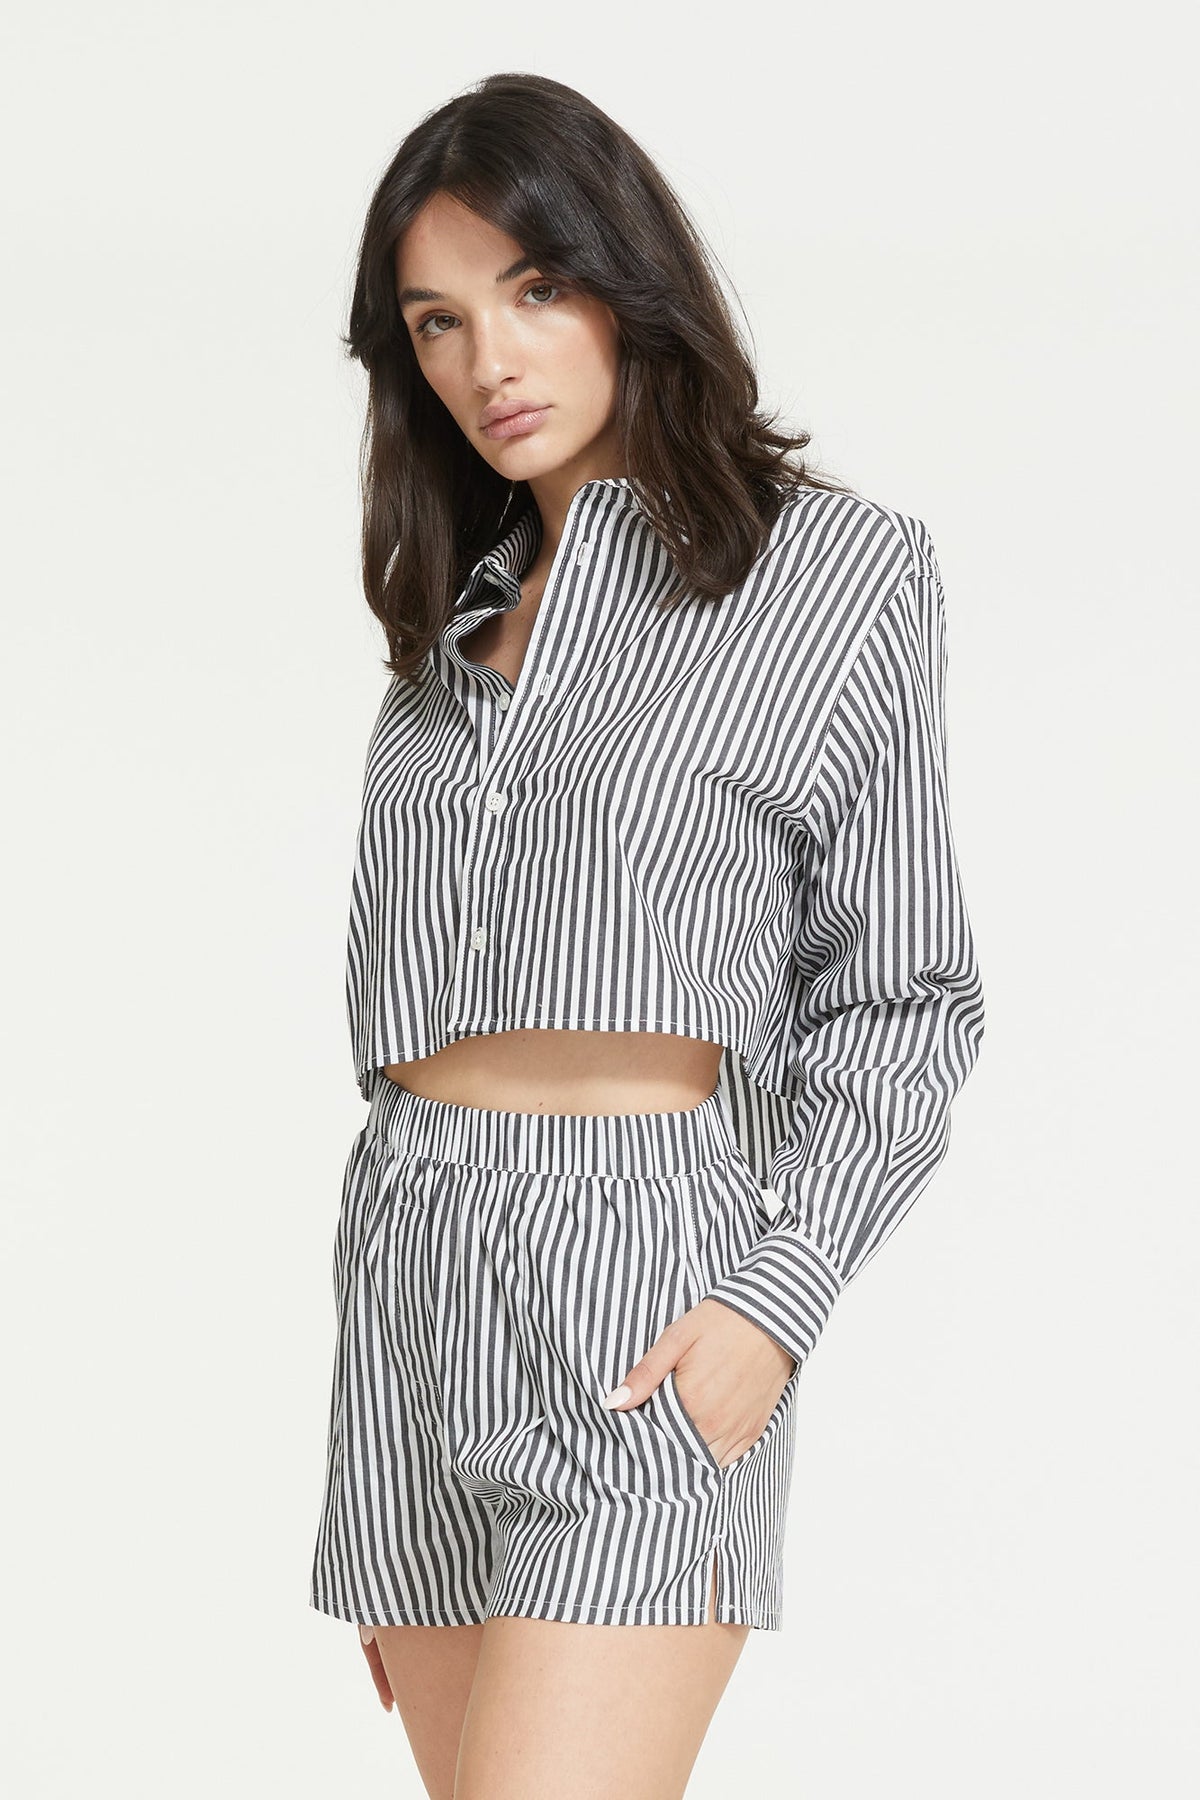 The Franca Stripe Crop Shirt By GINIA In Black &amp; White Stripe